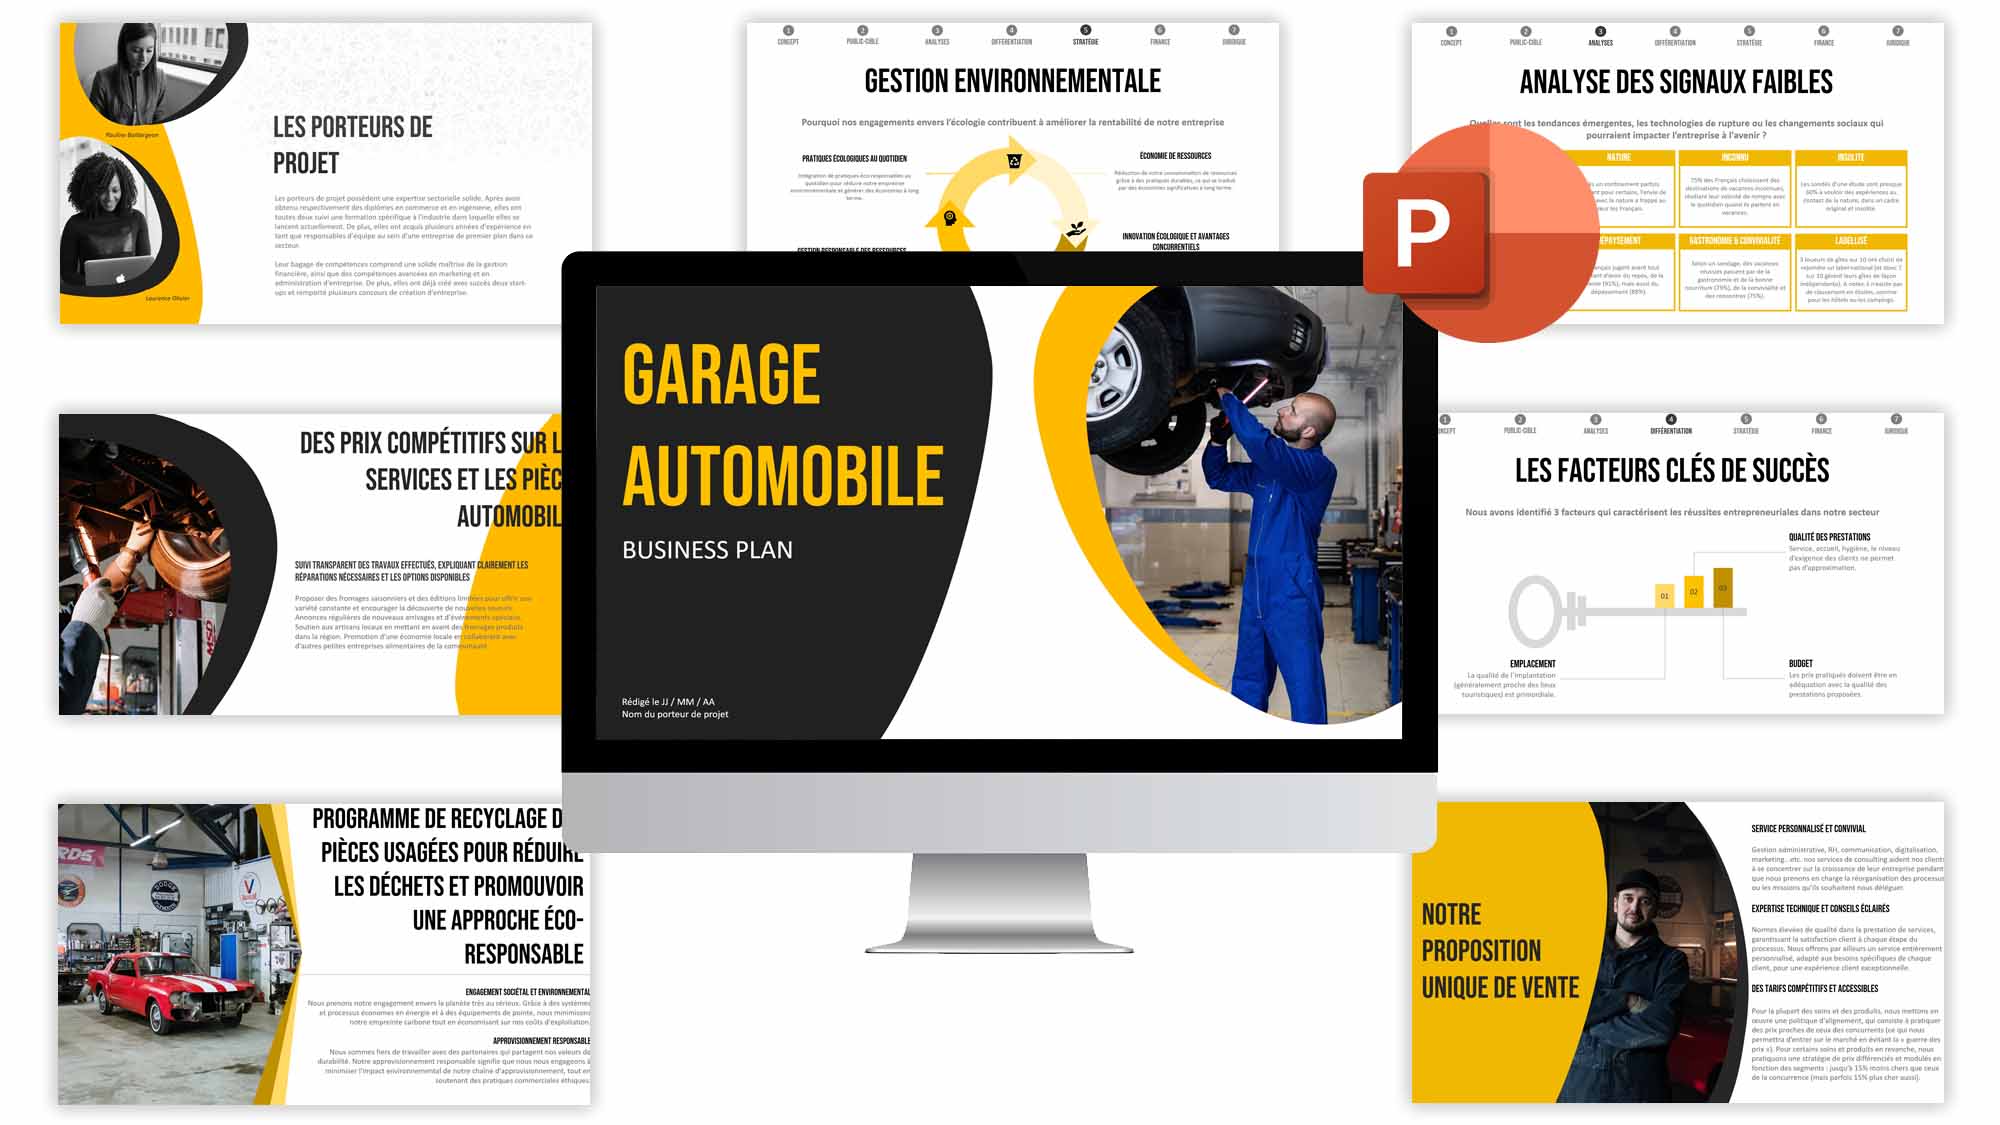 exemple business plan garage automobile